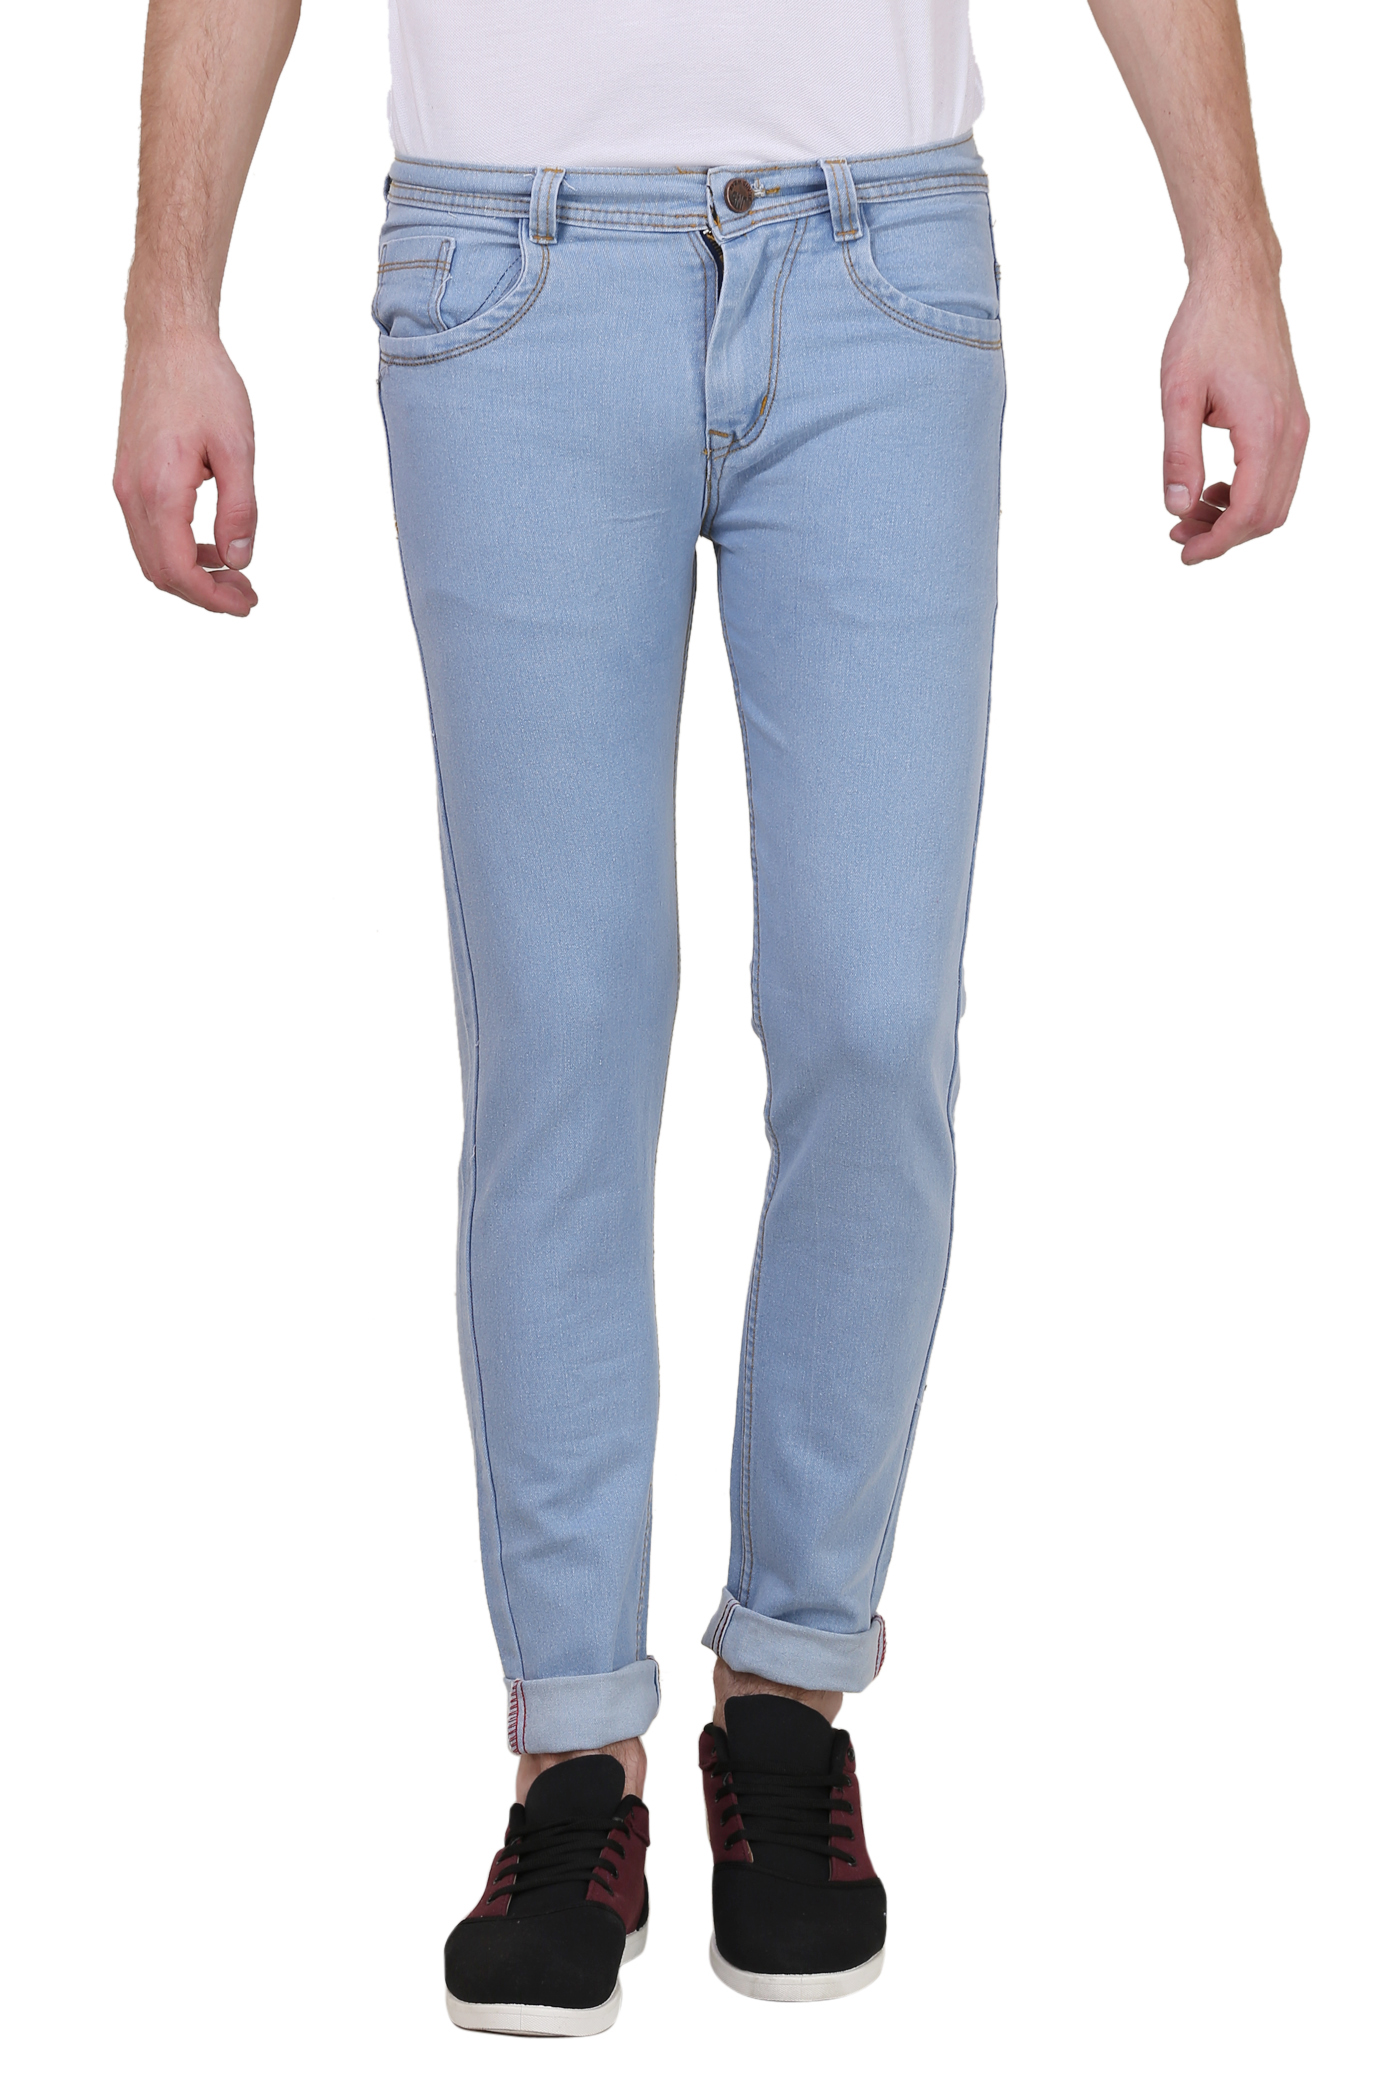 Buy X-CROSS Men's Blue Slim Fit Jeans Online @ ₹1399 from ShopClues